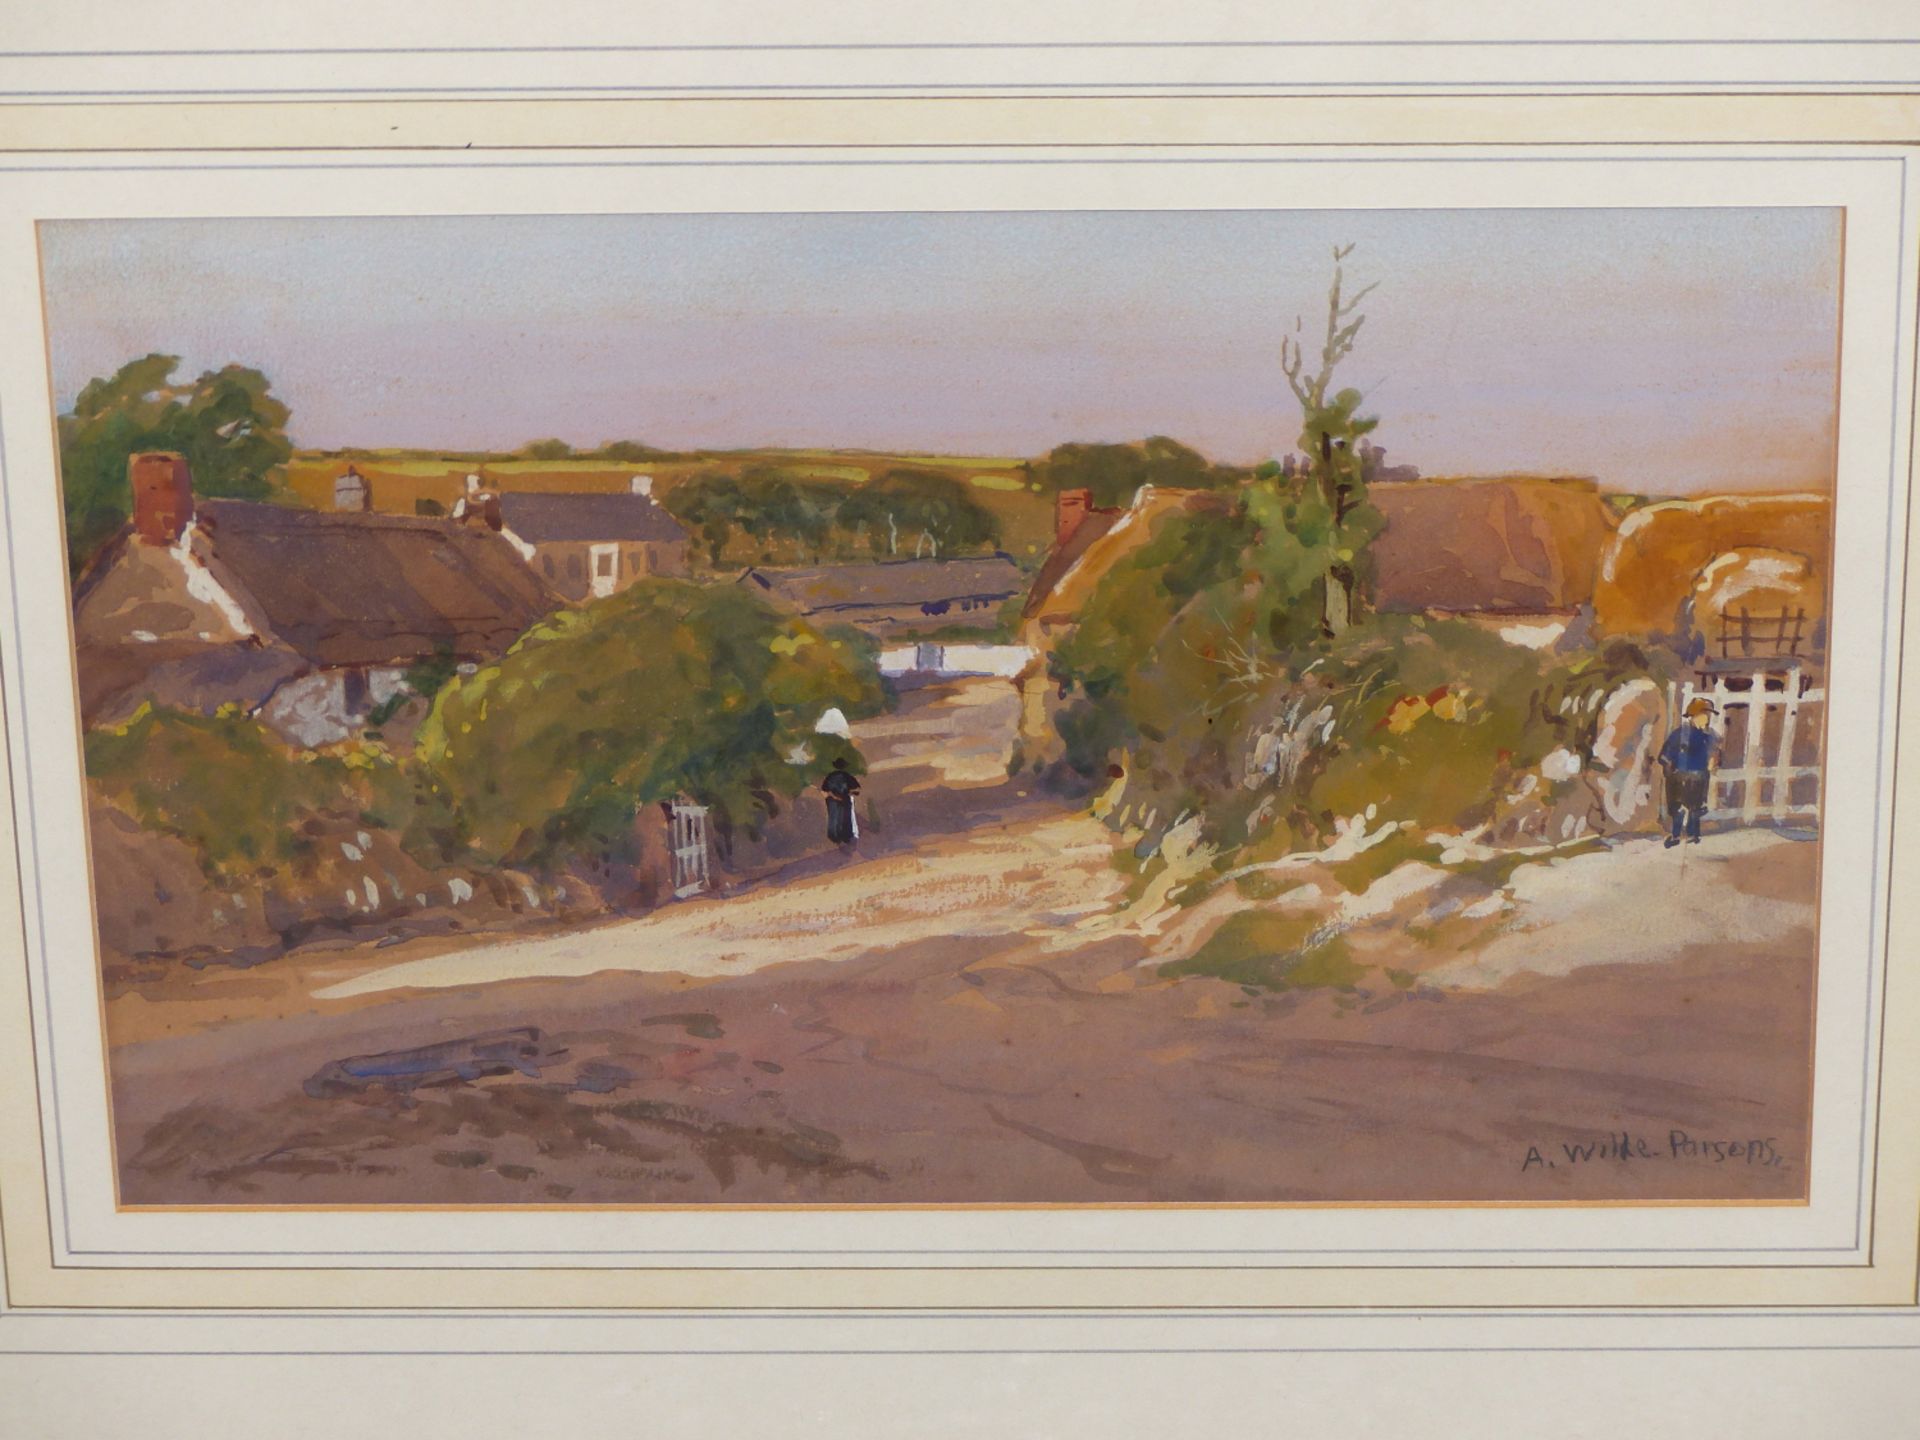 ATTIB. ARTHUR WILDE PARSONS (EXH. 1882-1922) RURAL VILLAGE LANE, WATERCOLOUR, 33 X 21 cm. - Image 2 of 6